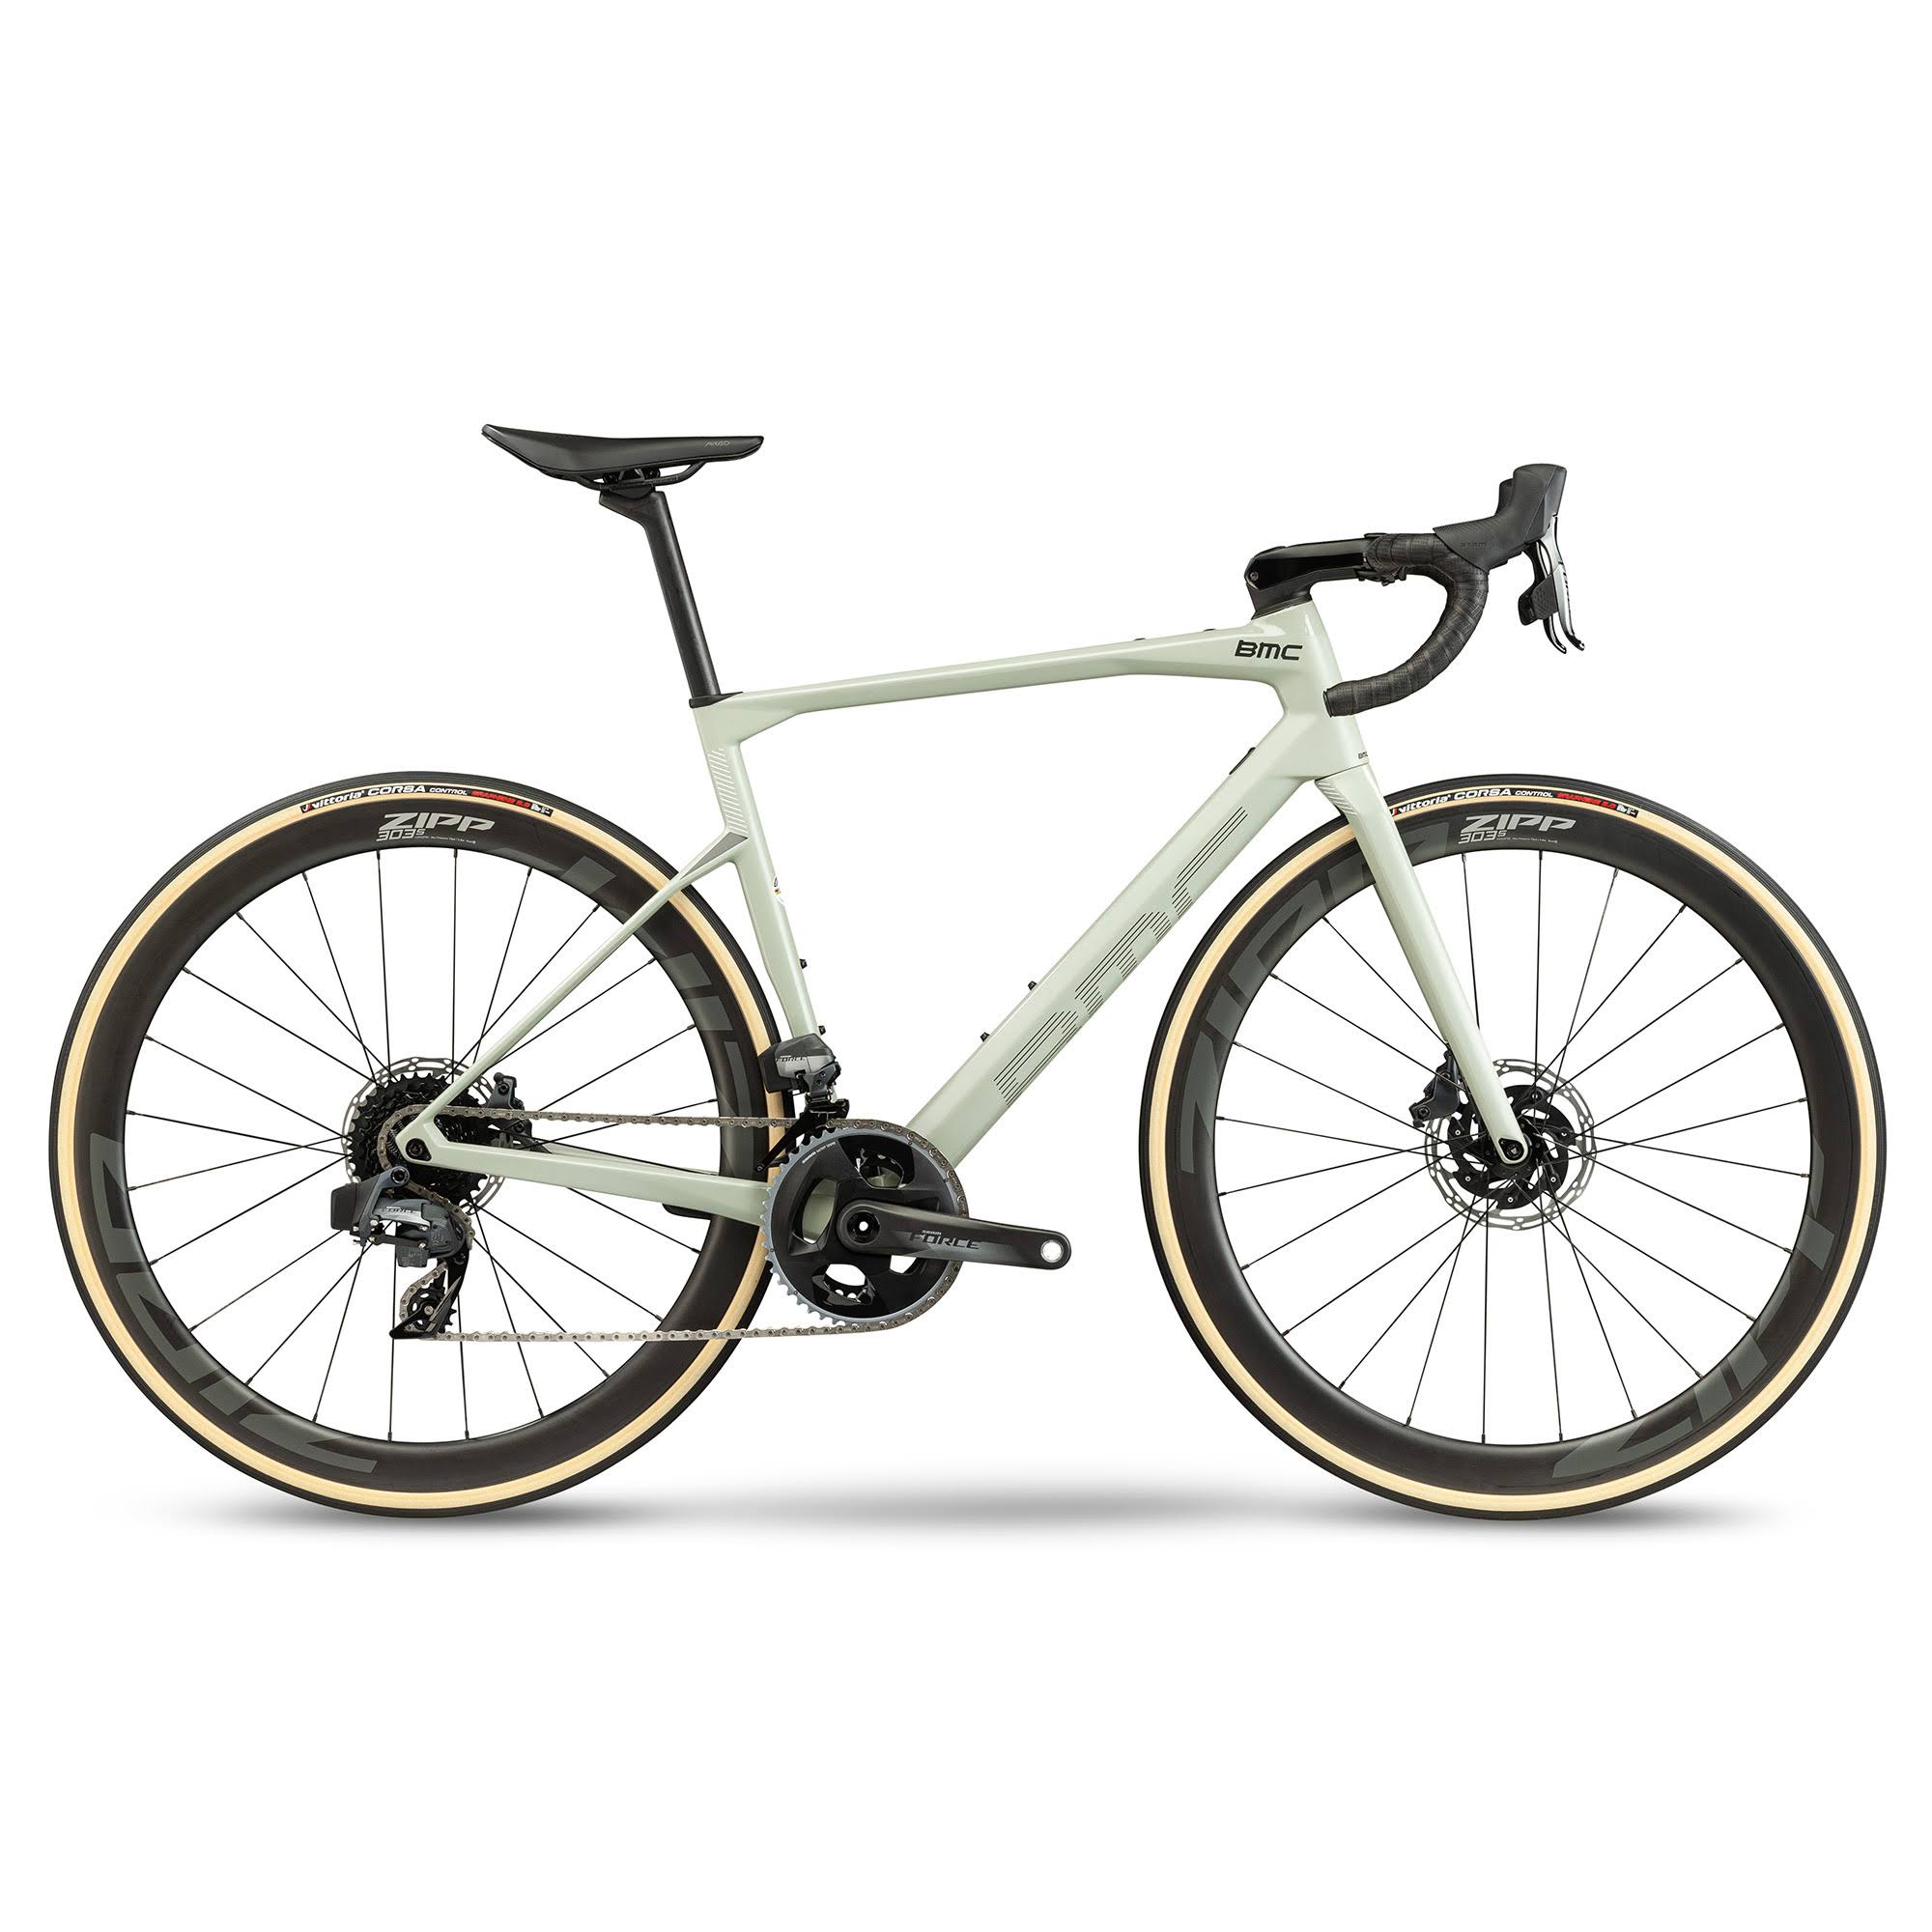 BMC 2021 Roadmachine 01 Three Road Bike - Green Sand & Black, (54cm)